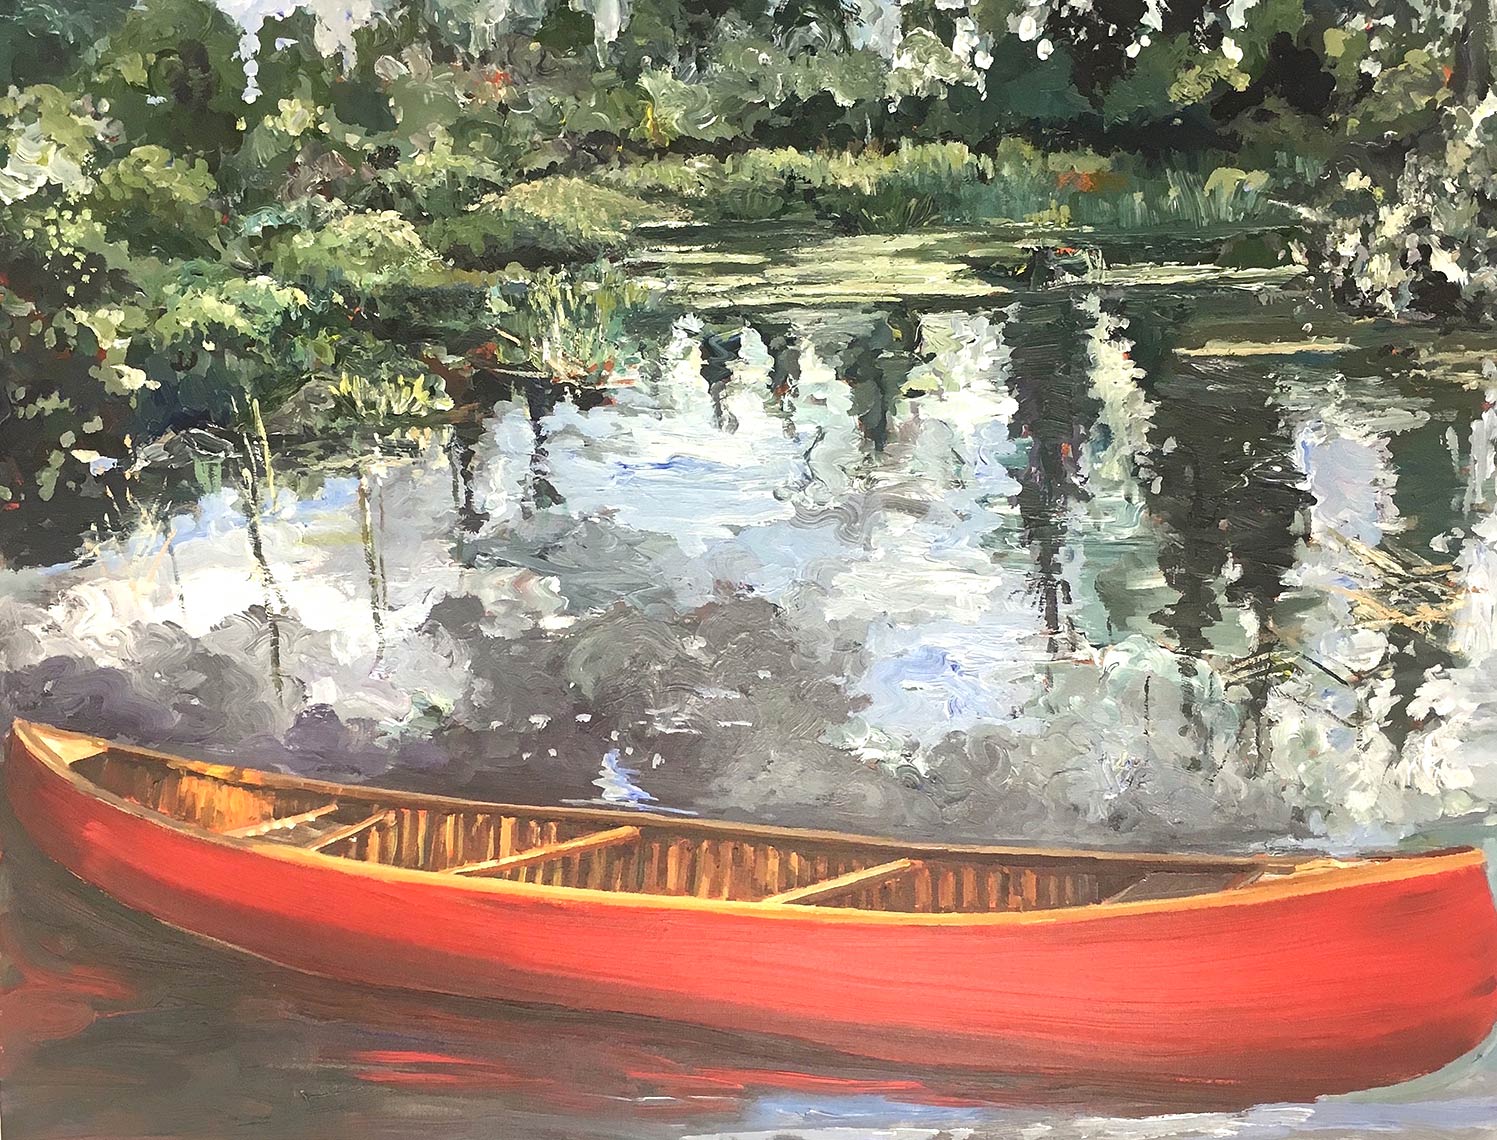 Canoe-Cove-2018-Acrylic-on-canvas-30x40-inches